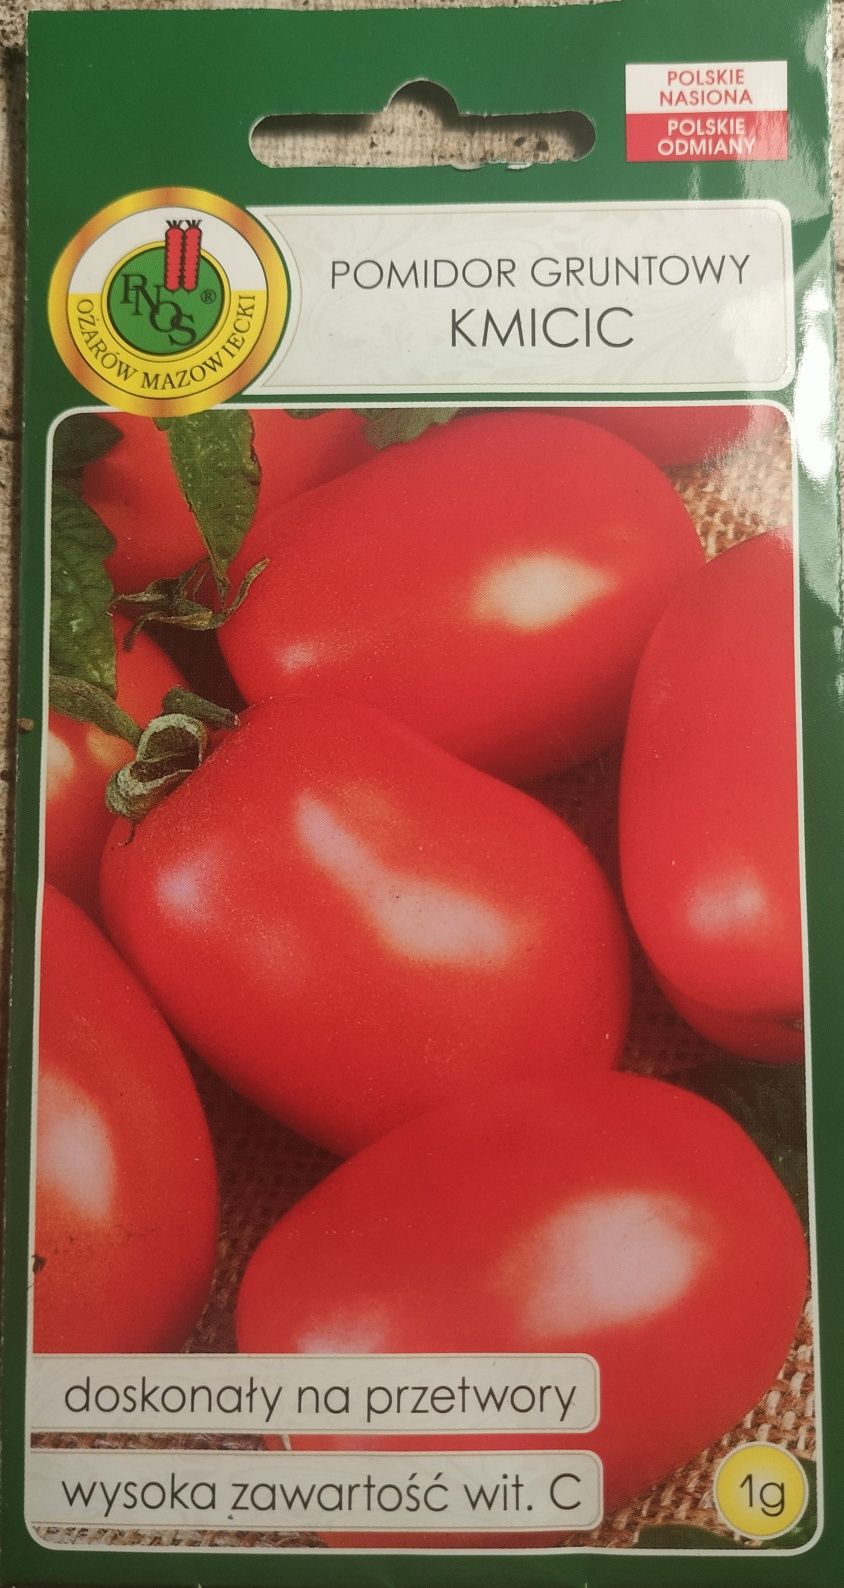 Rozsada pomidora